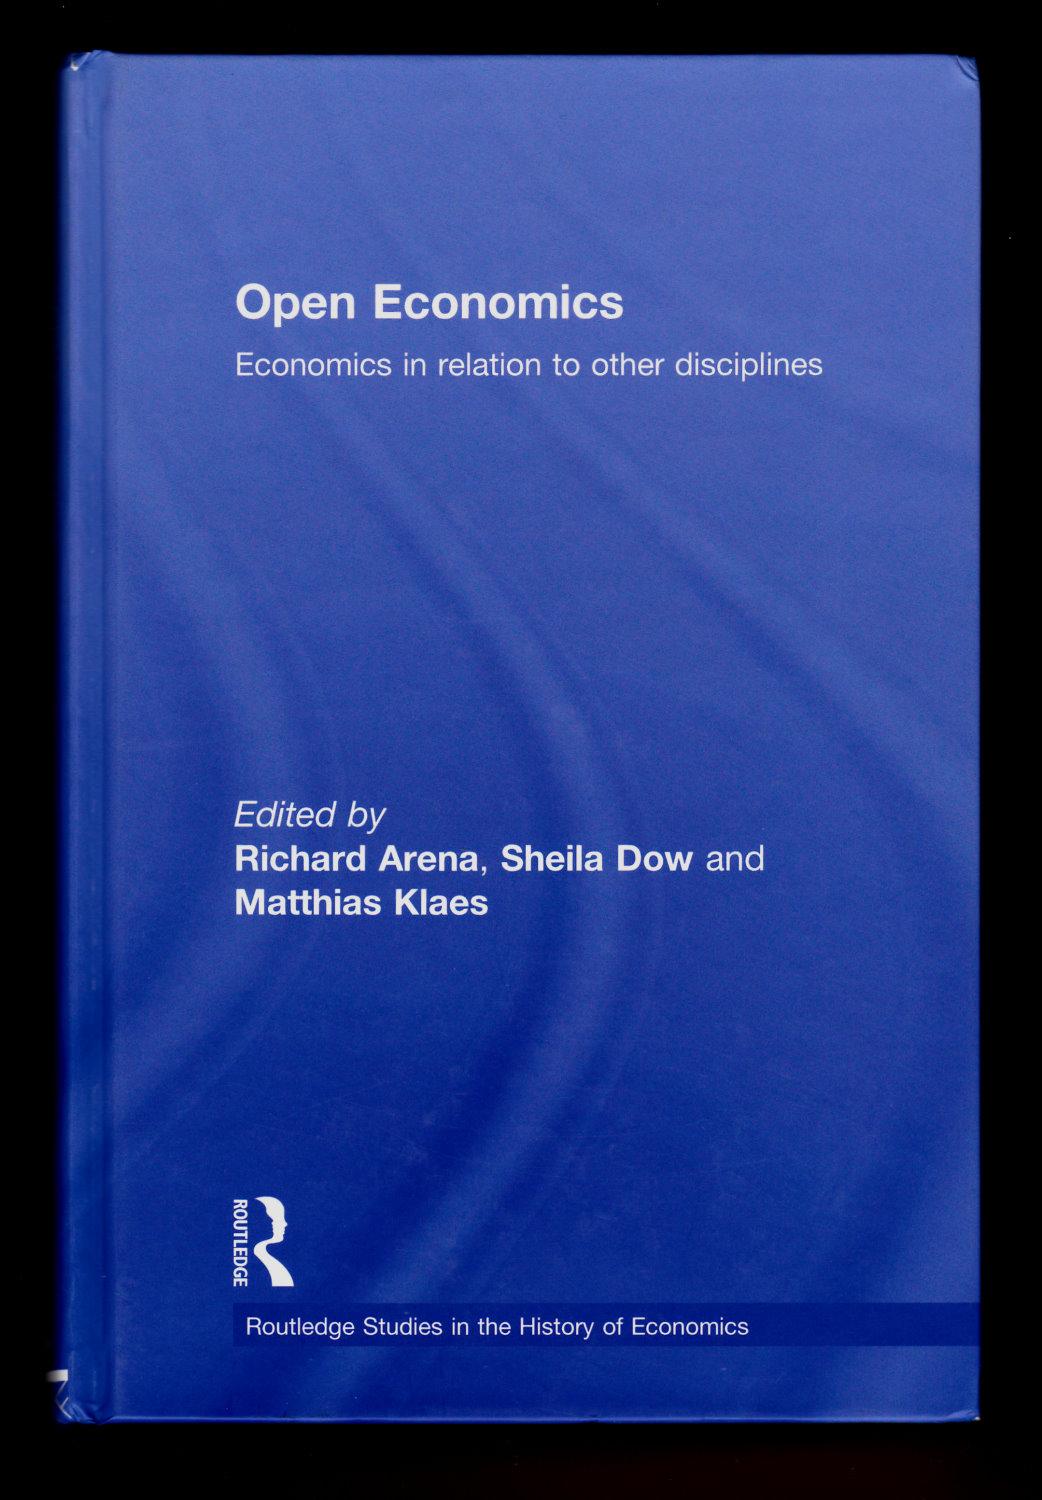 Open Economics: Economics in Relation to Other Disciplines (Routledge Studies in the History of Economics) - Richard Arena; Sheila Dow; Matthias Klaes